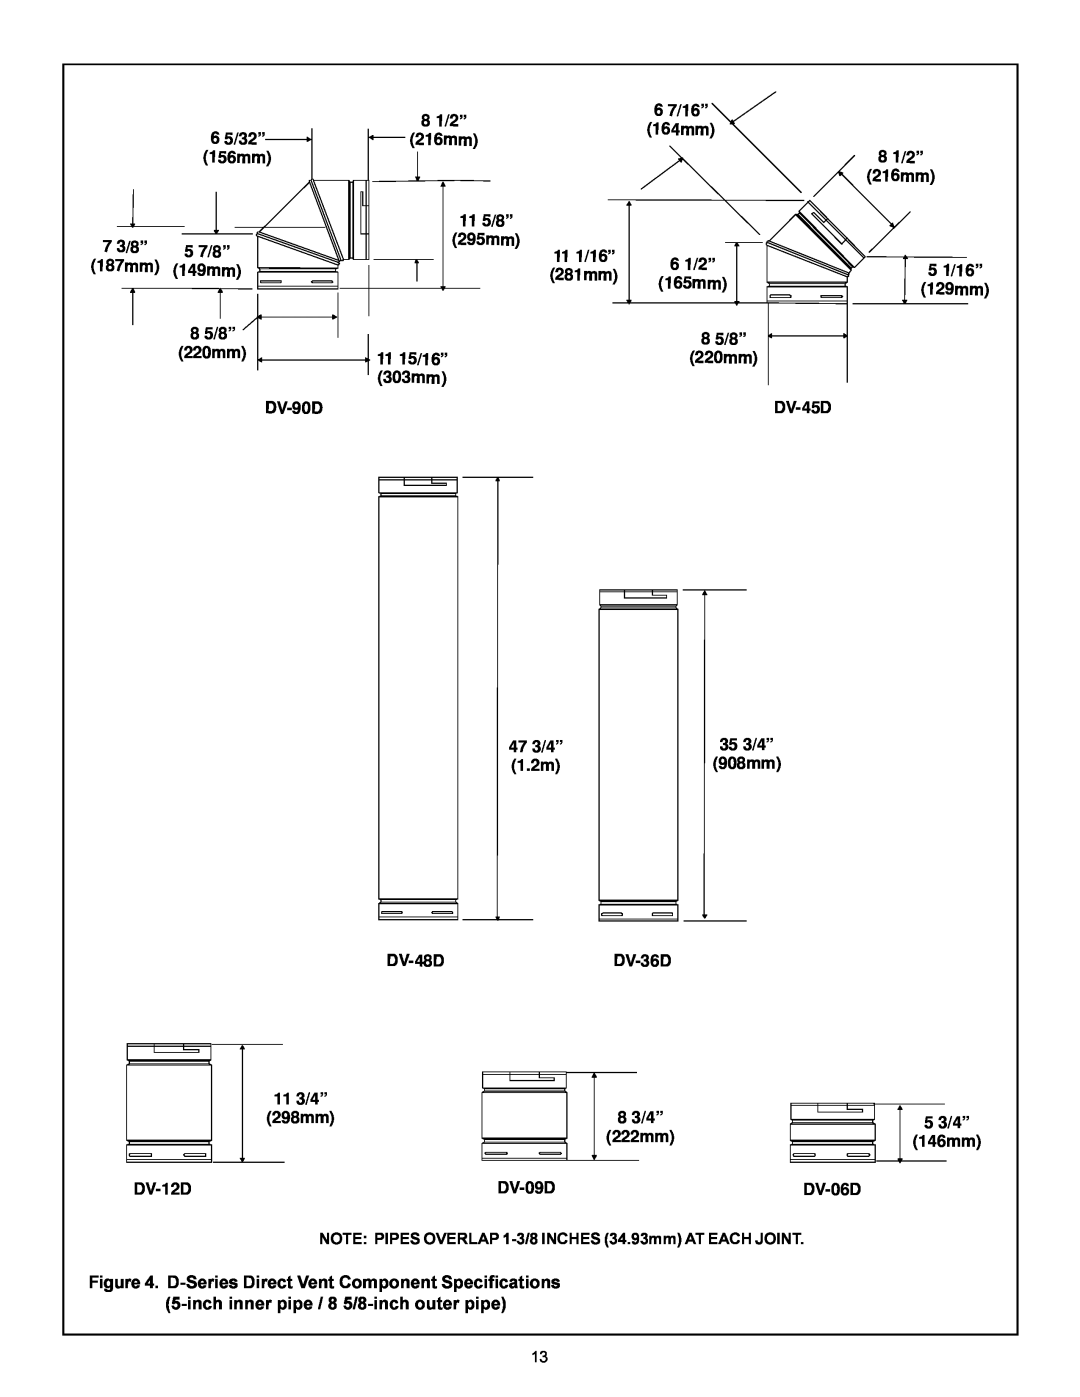 Heat & Glo LifeStyle 7000XLT manual 6 5/32” 156mm 